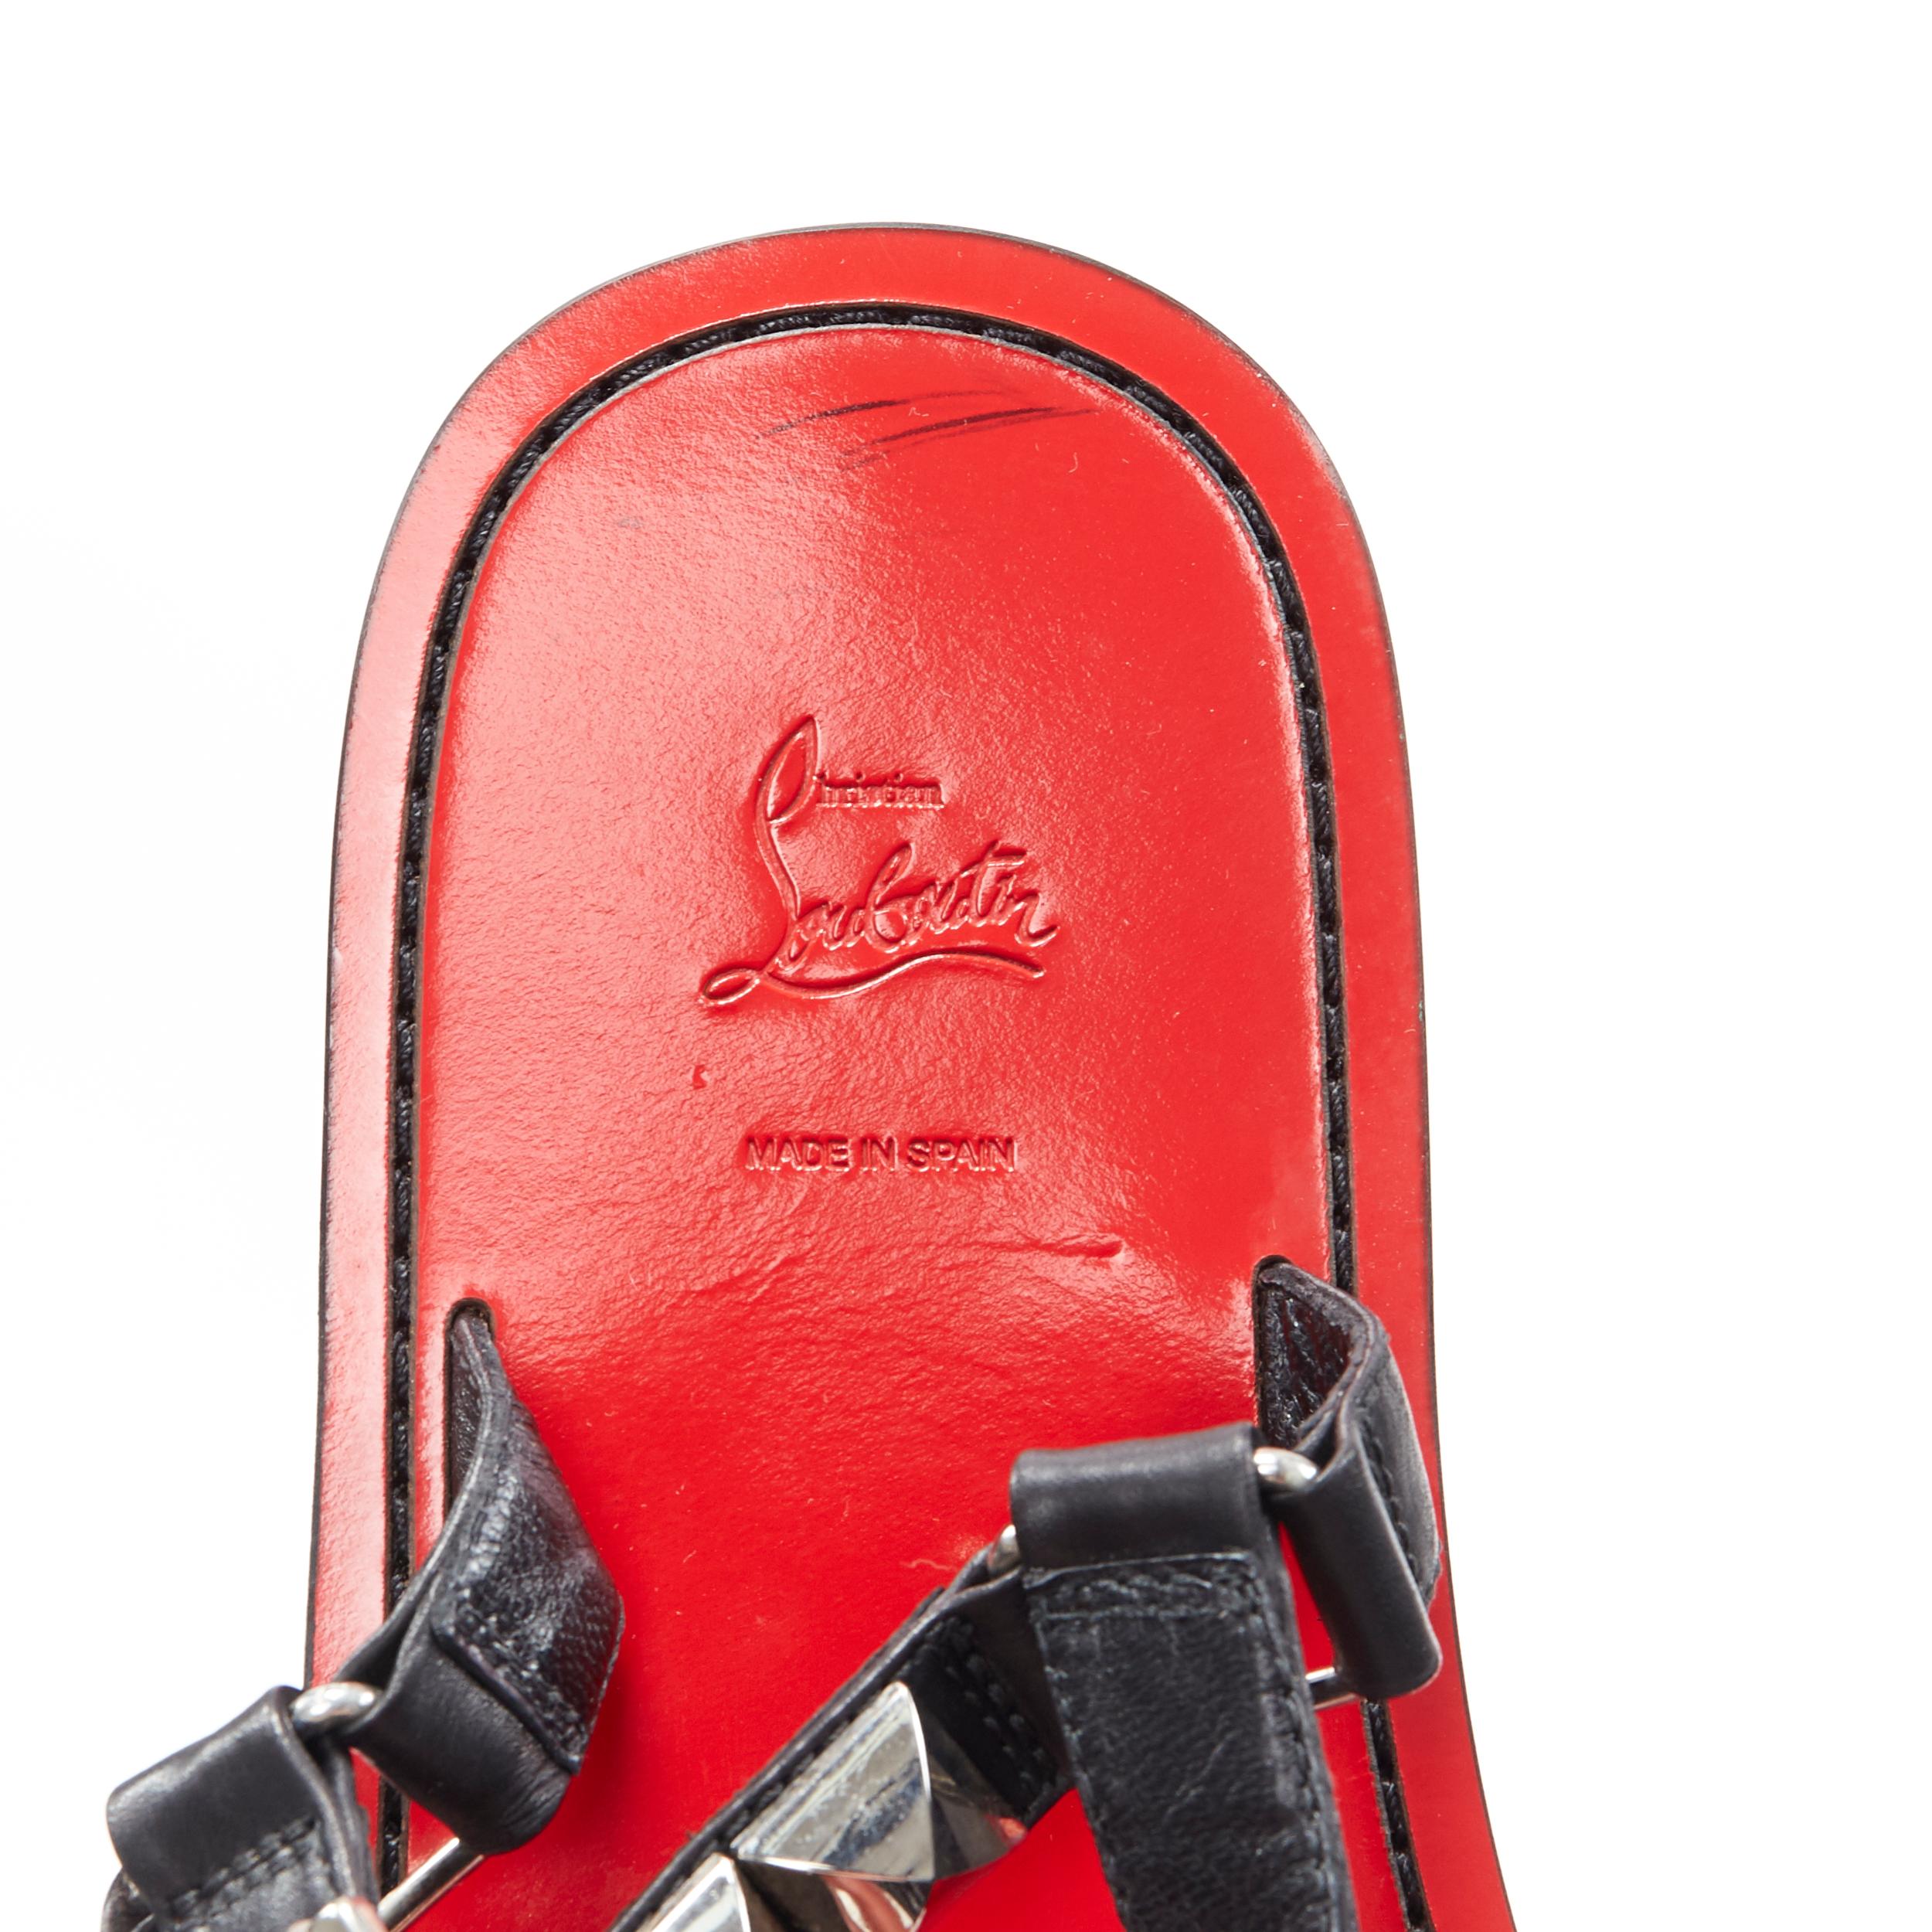 CHRISTIAN LOUBOUTIN Cordaclous Flat silver studded black red leather sandal EU40 5